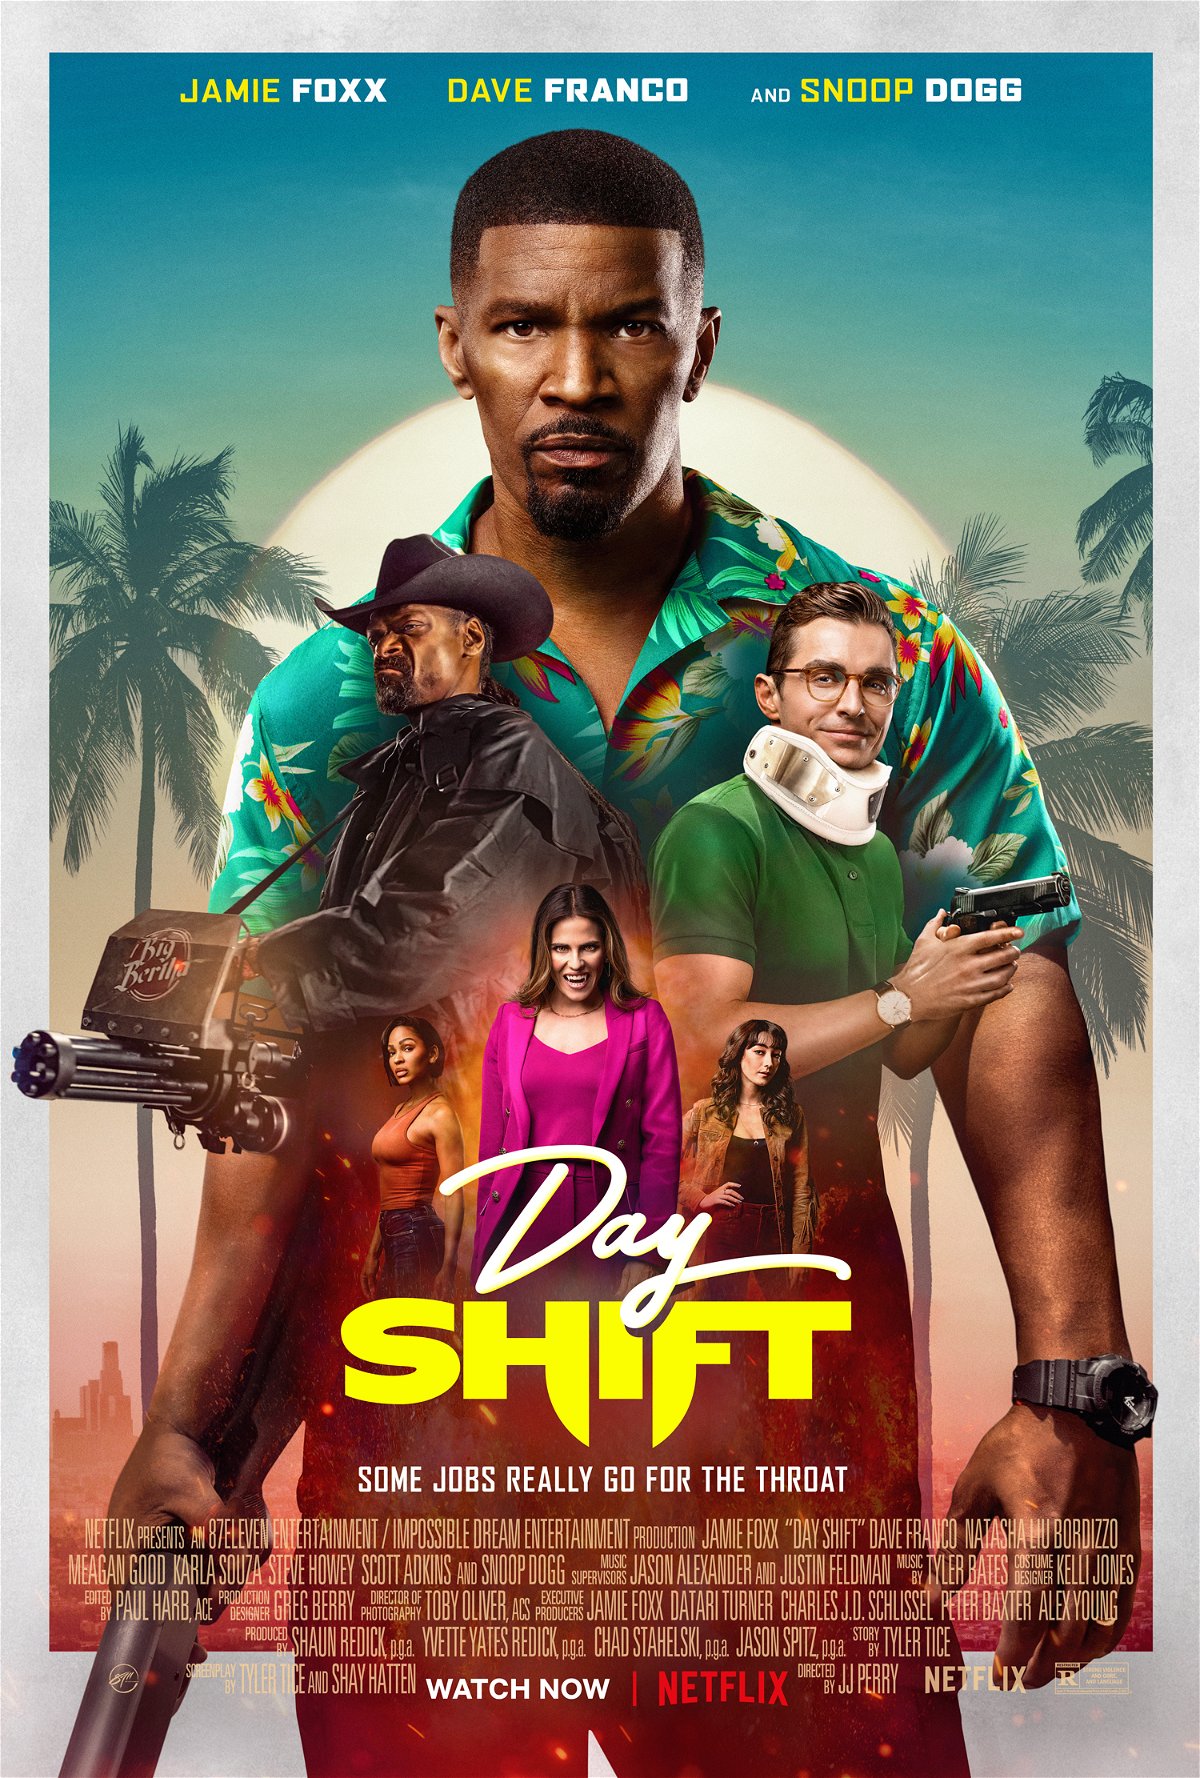 Day Shift - Jamie Foxx και οι άλλοι χαρακτήρες στην αφίσα της ταινίας του Netflix